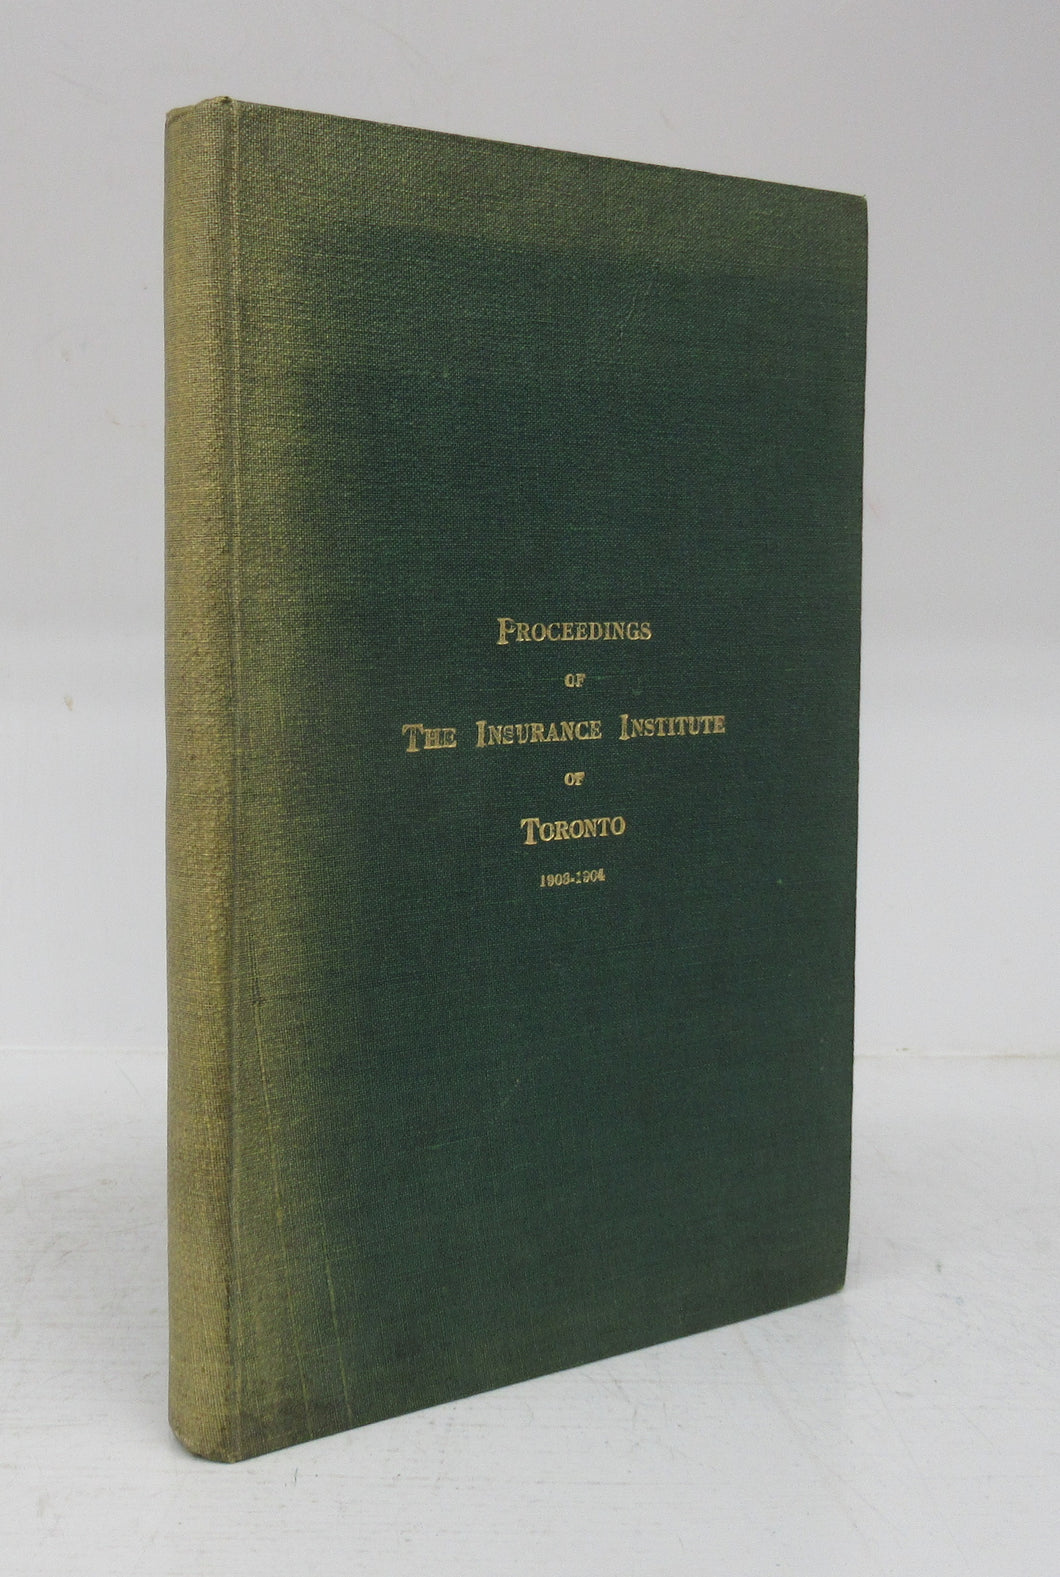 The Insurance Institute of Toronto: Proceedings 1903-1904